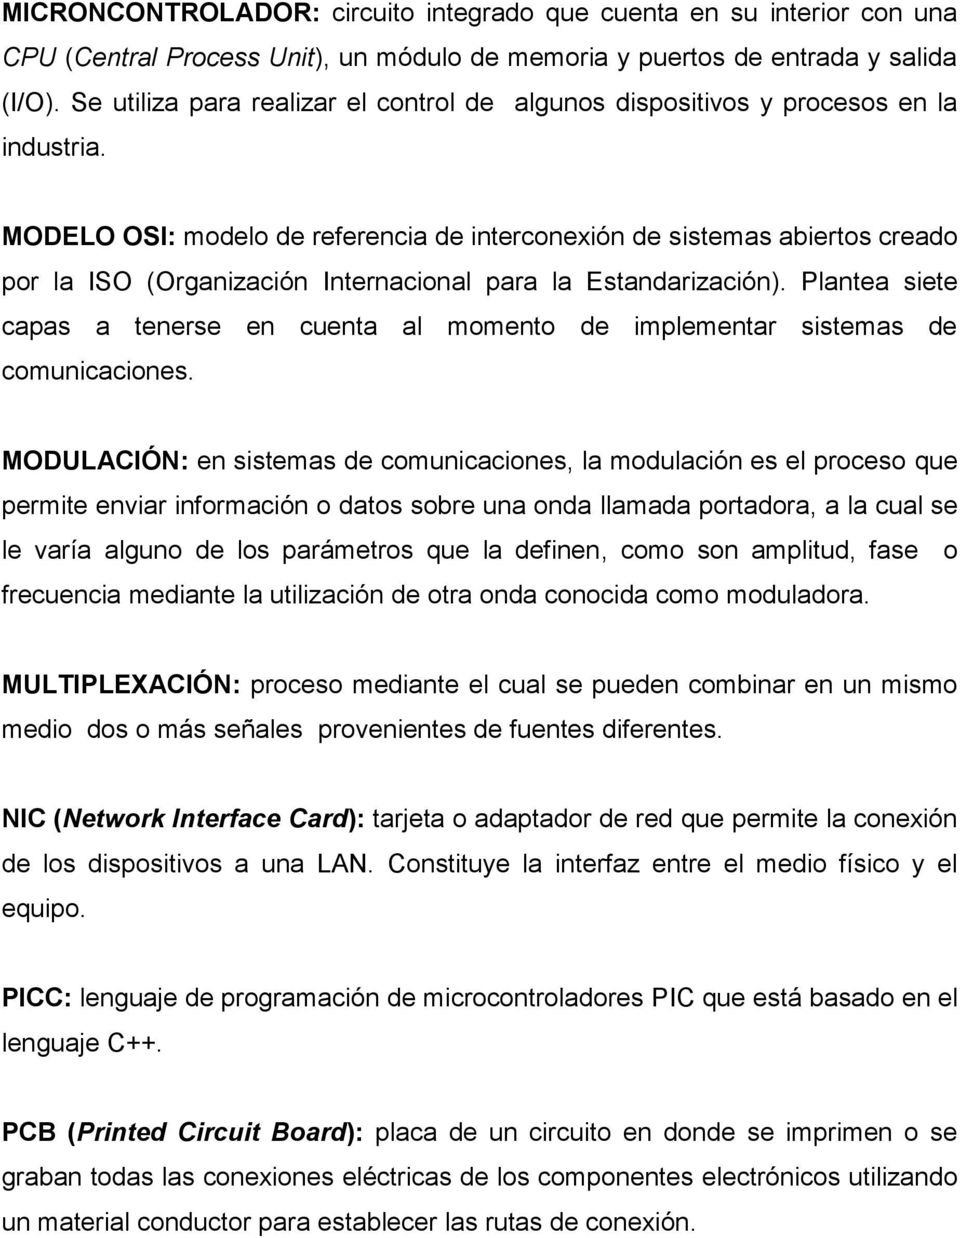 MODELO OSI: modelo de referencia de interconexión de sistemas abiertos creado por la ISO (Organización Internacional para la Estandarización).